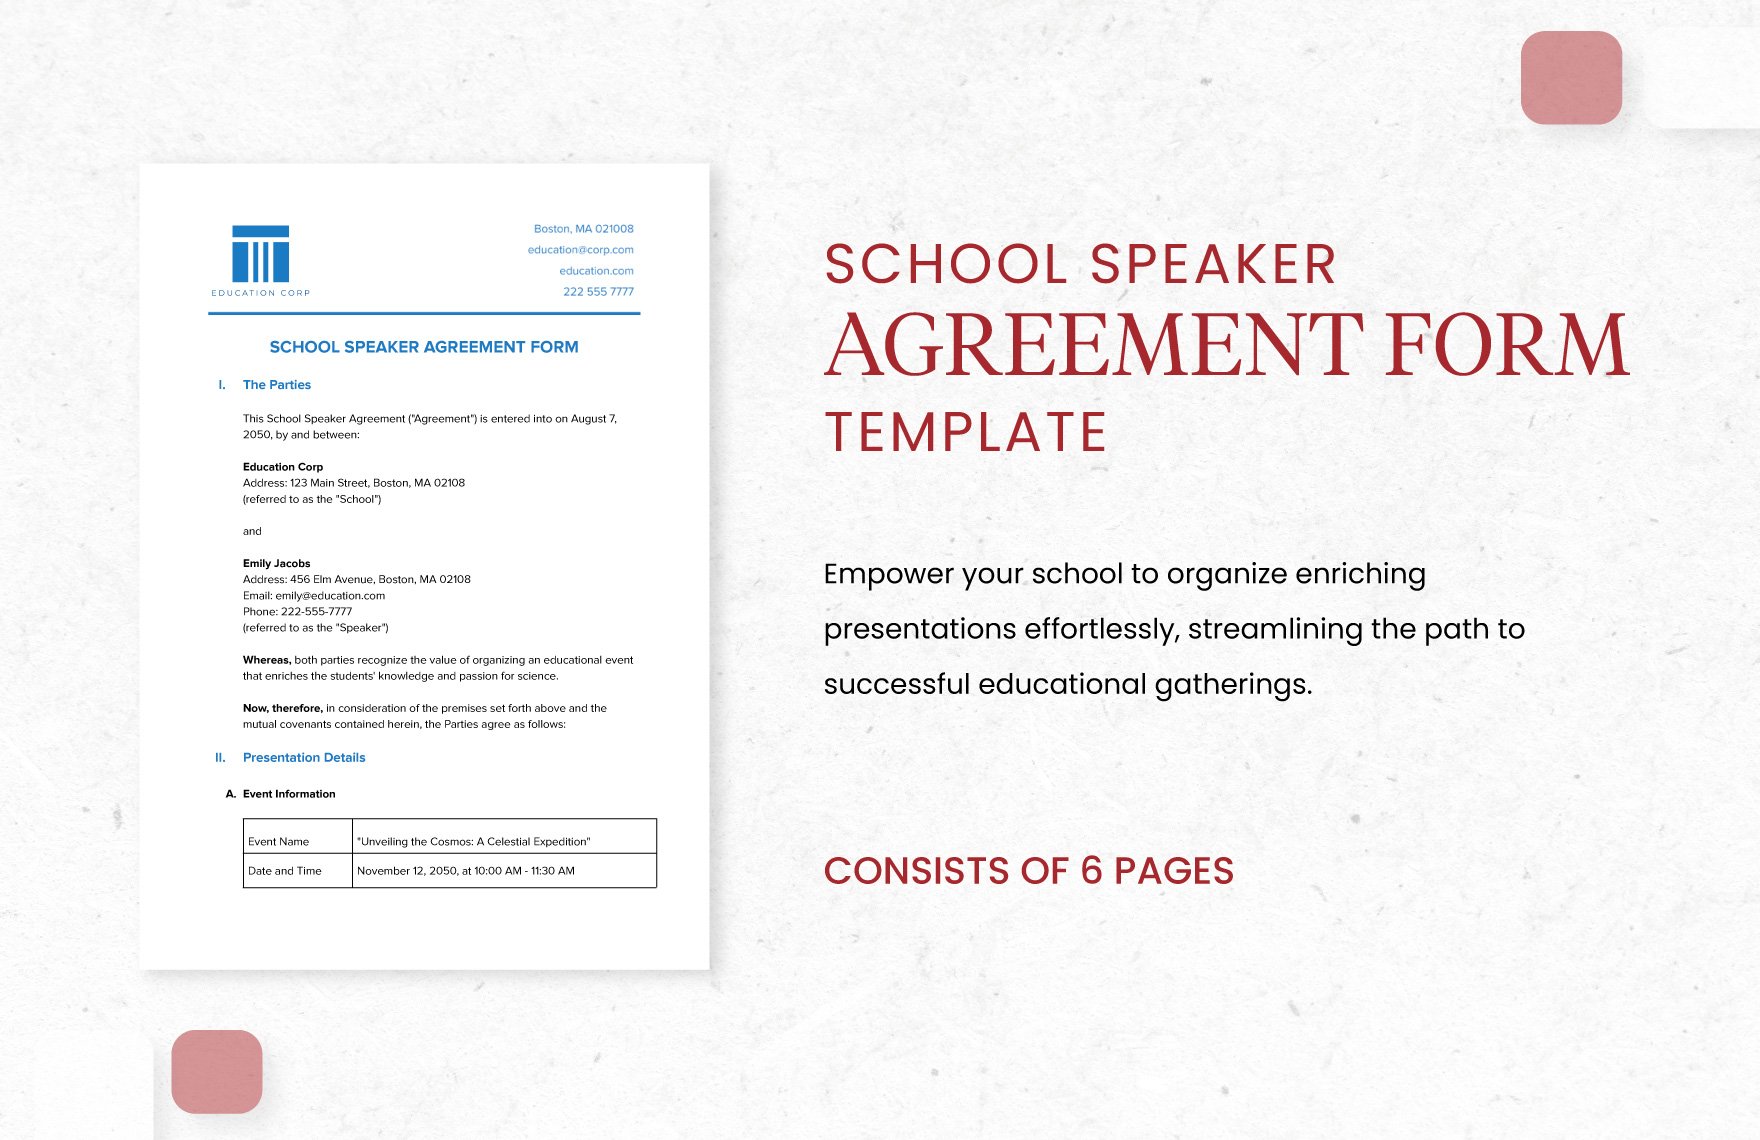 School Speaker Agreement Form Template in Word, Google Docs, PDF